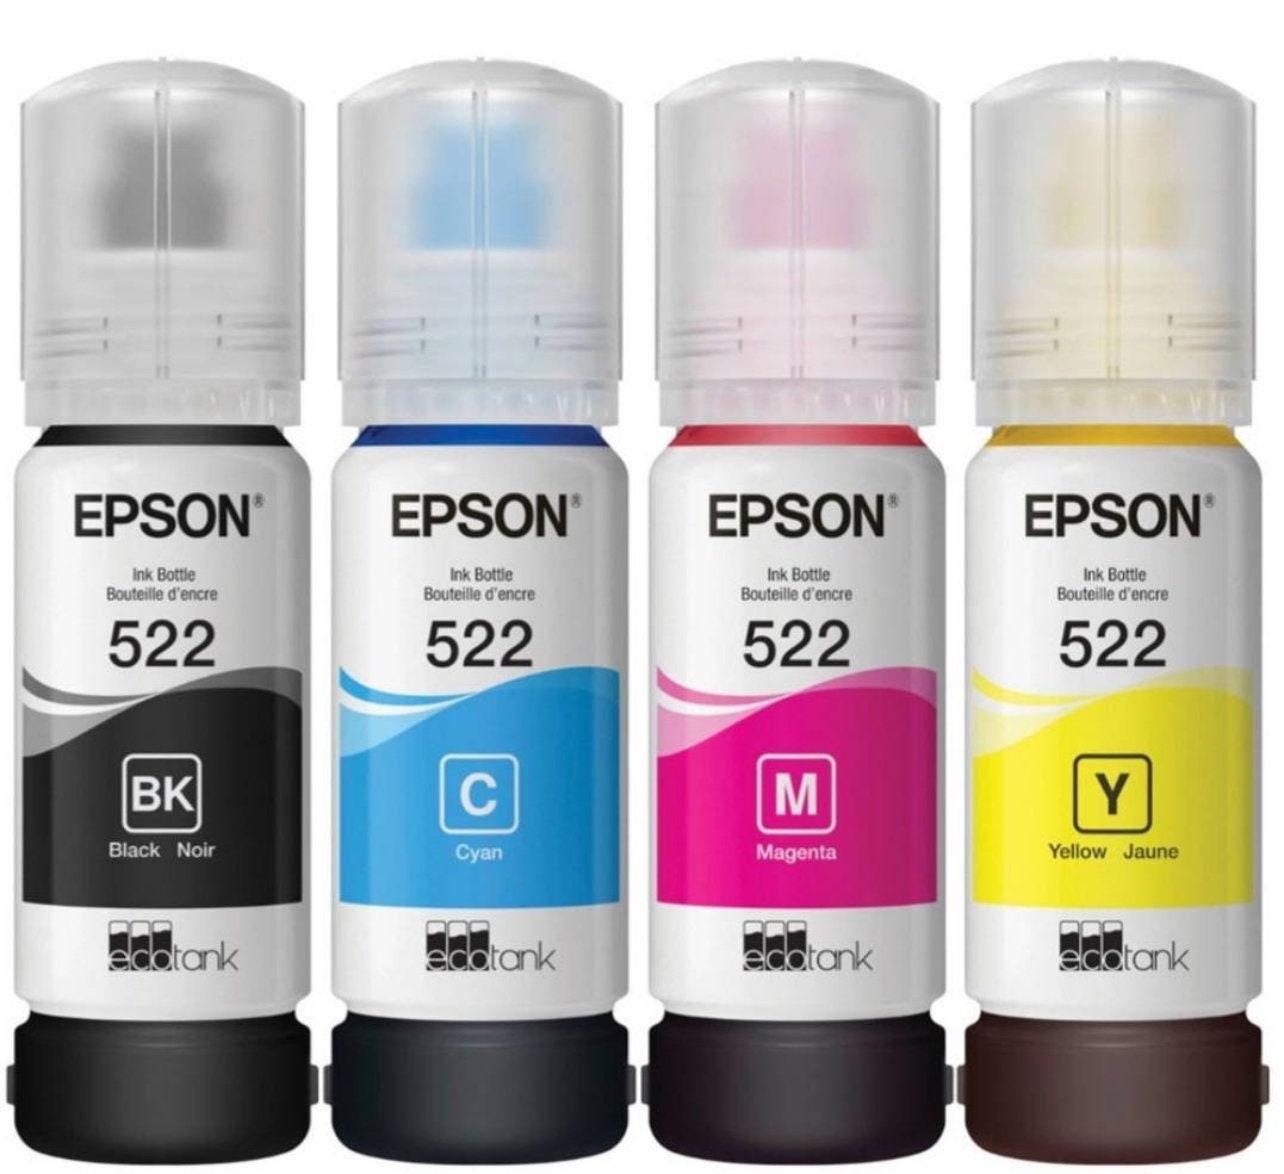 Epson 104, Encre noire/cyan/magenta/jaune - PEARL